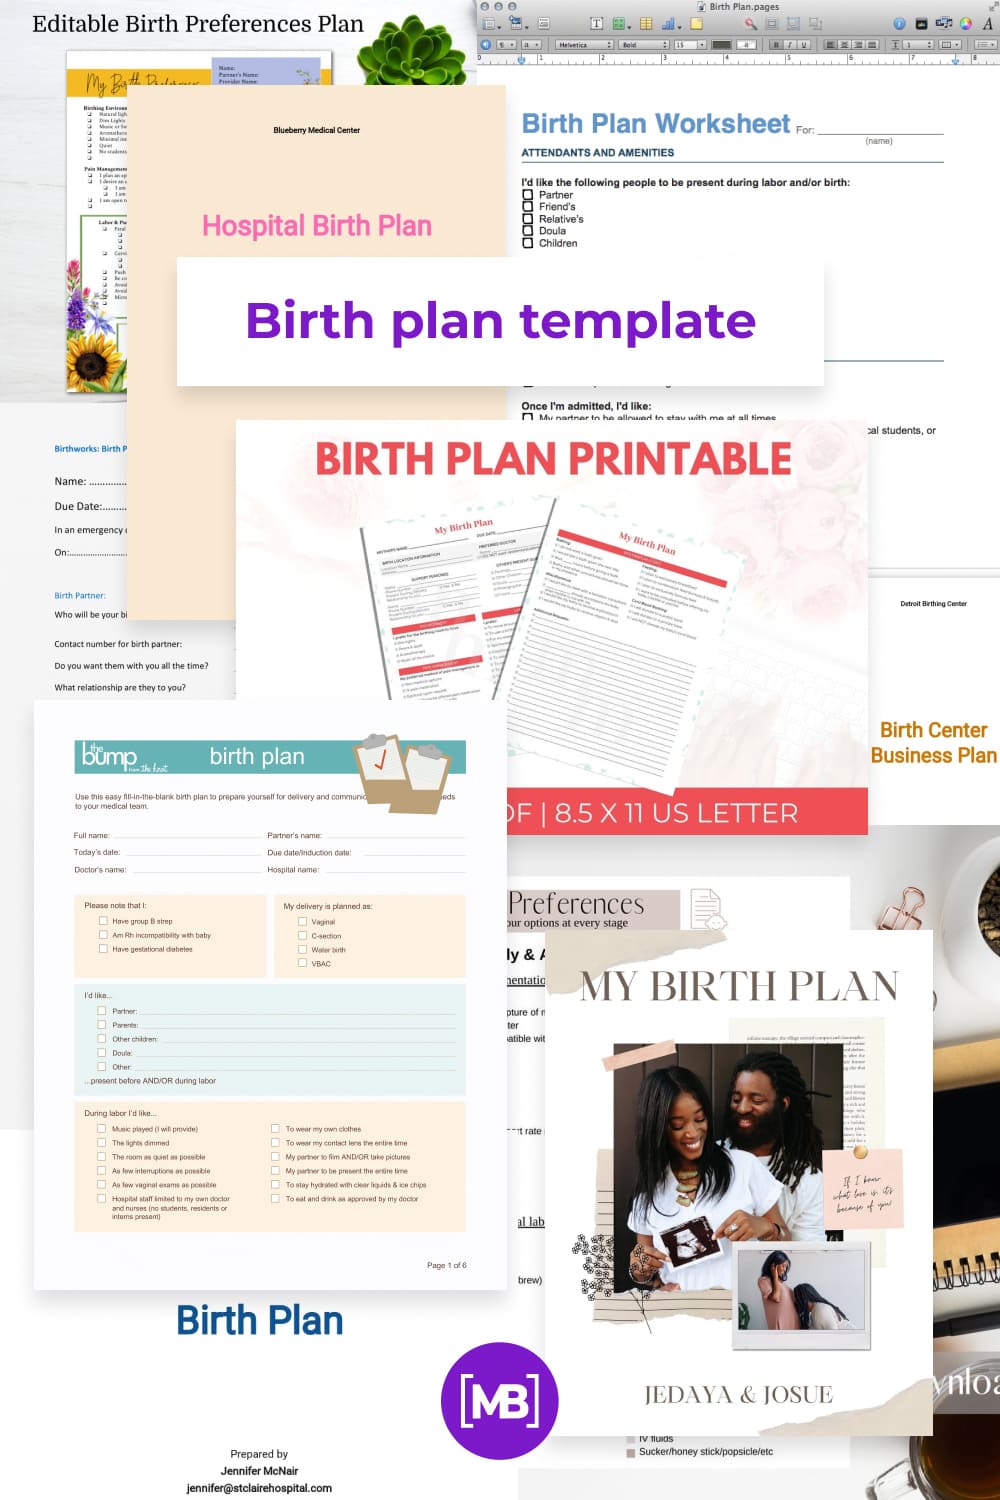 Birth Plan Templates Pinterest.